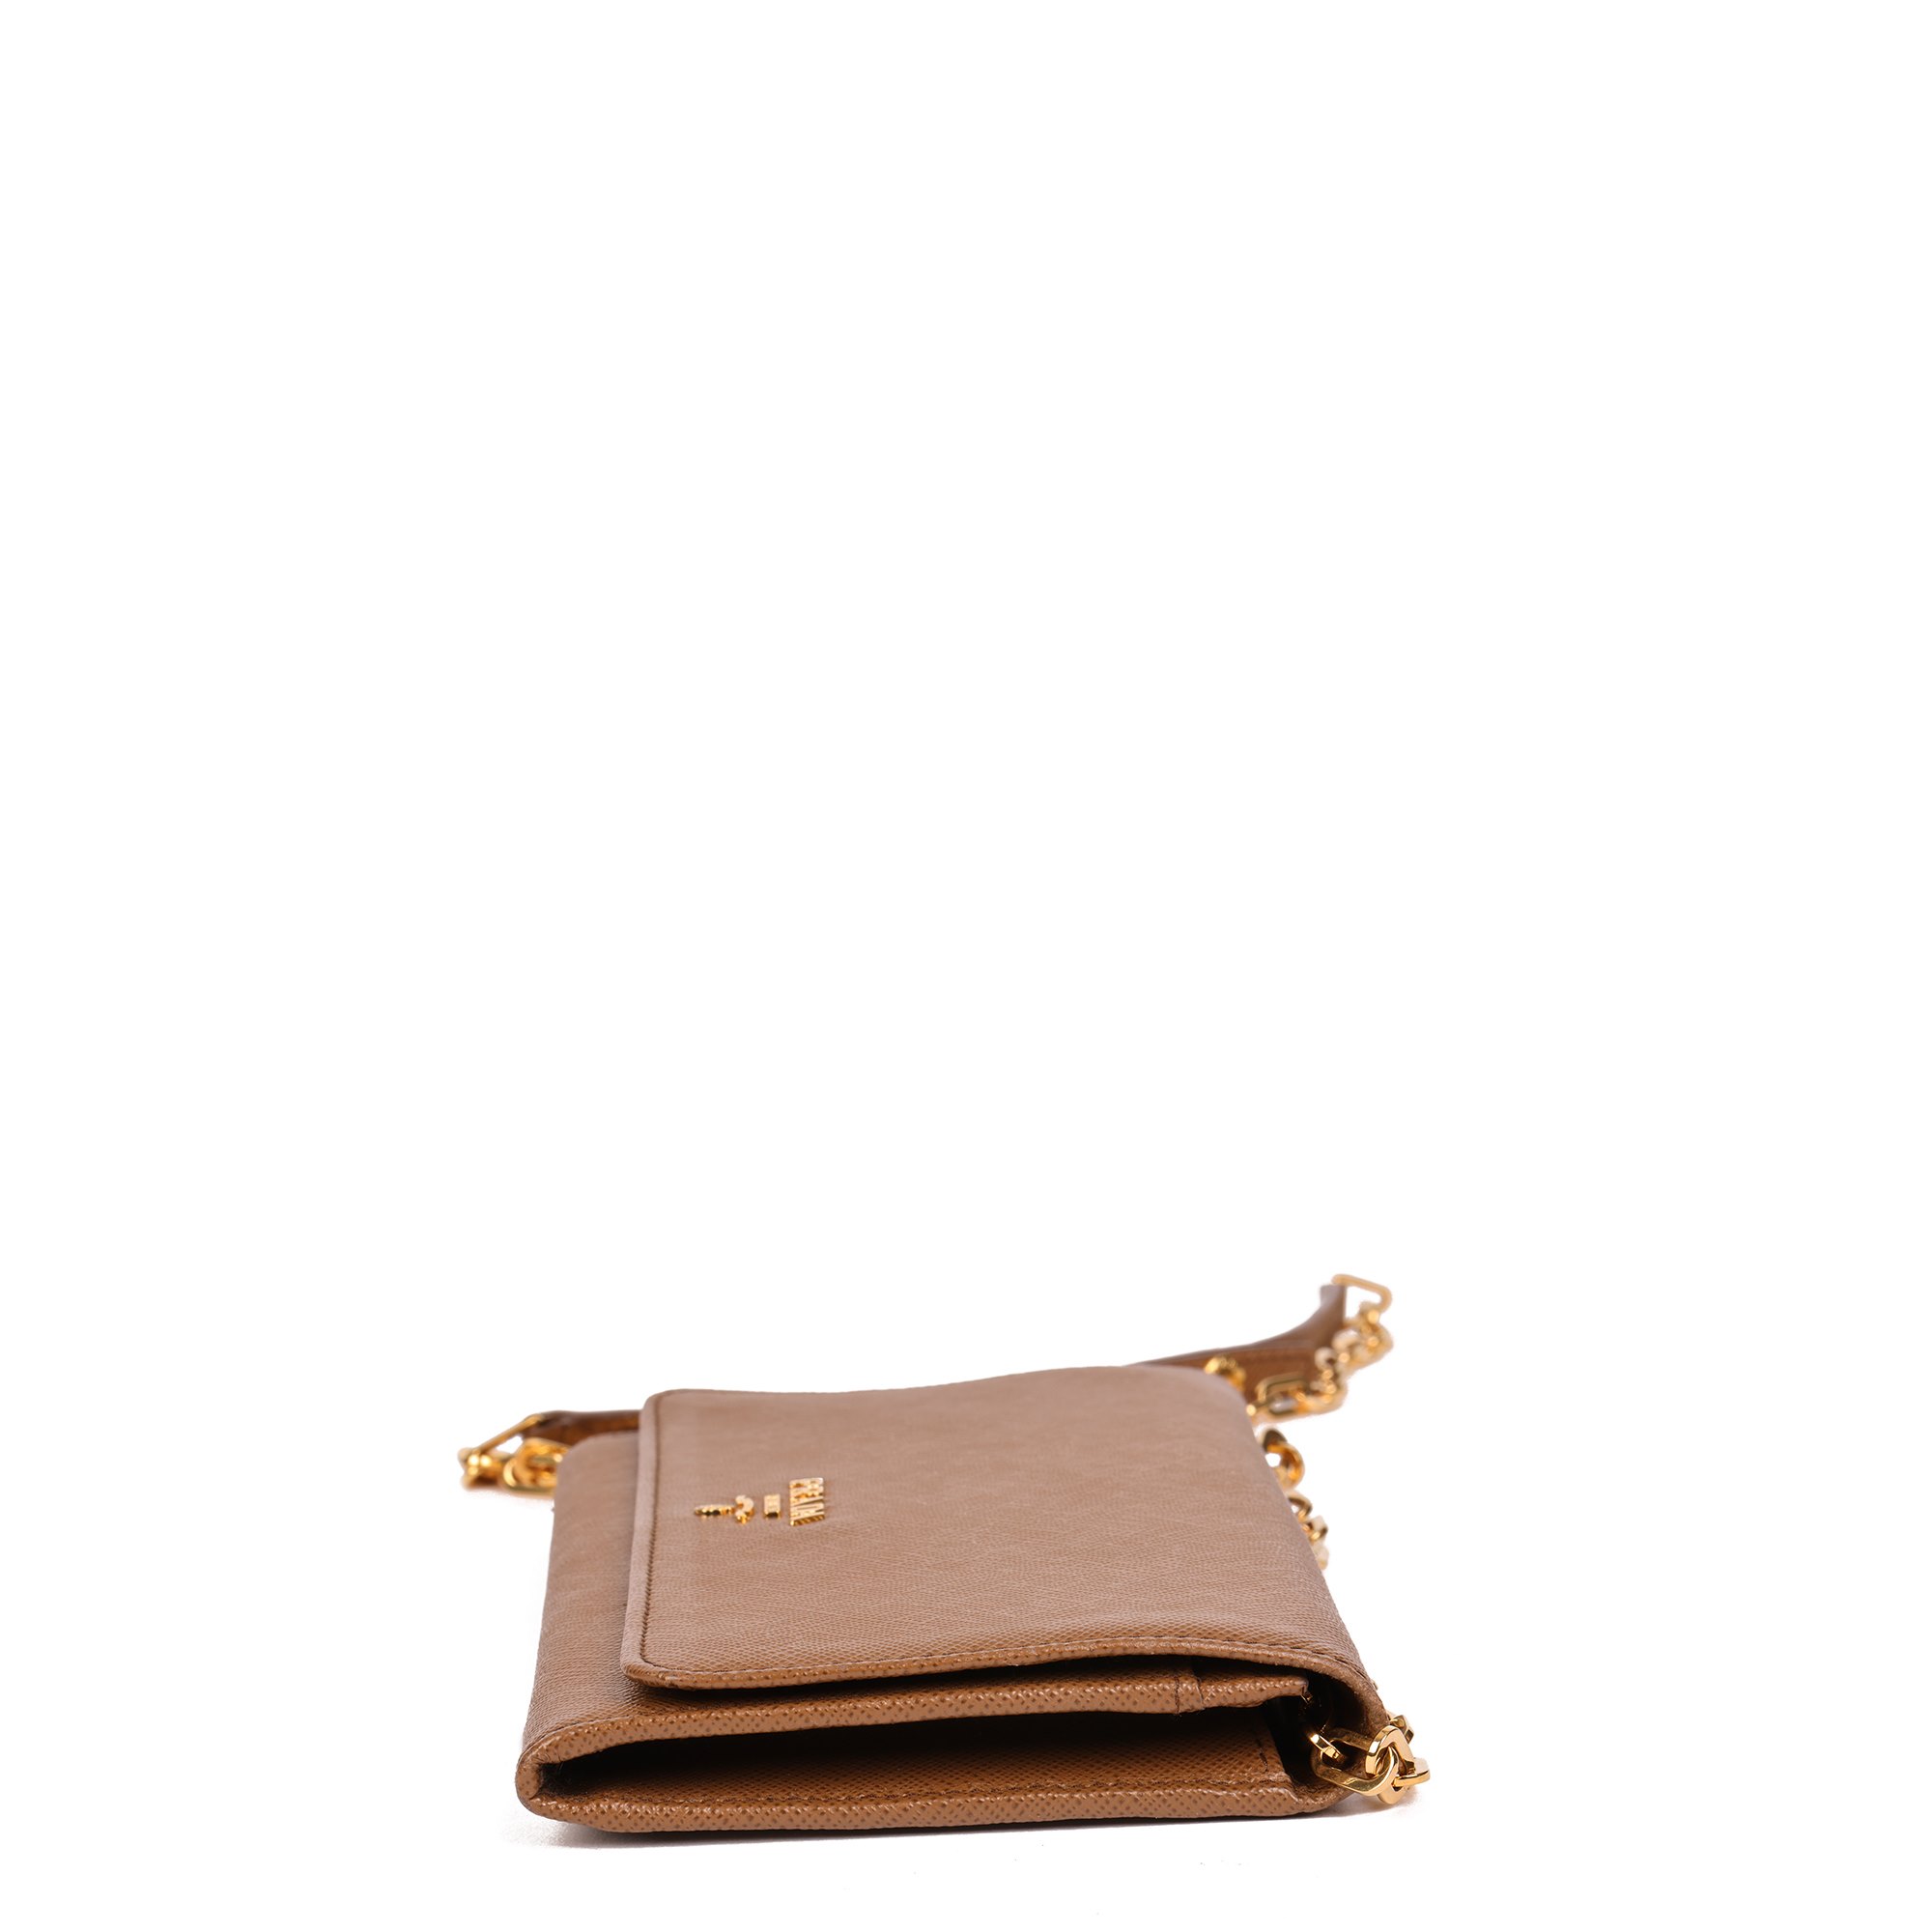 Prada Cannella Brown Saffiano Leather Wallet-on-Chain WOC